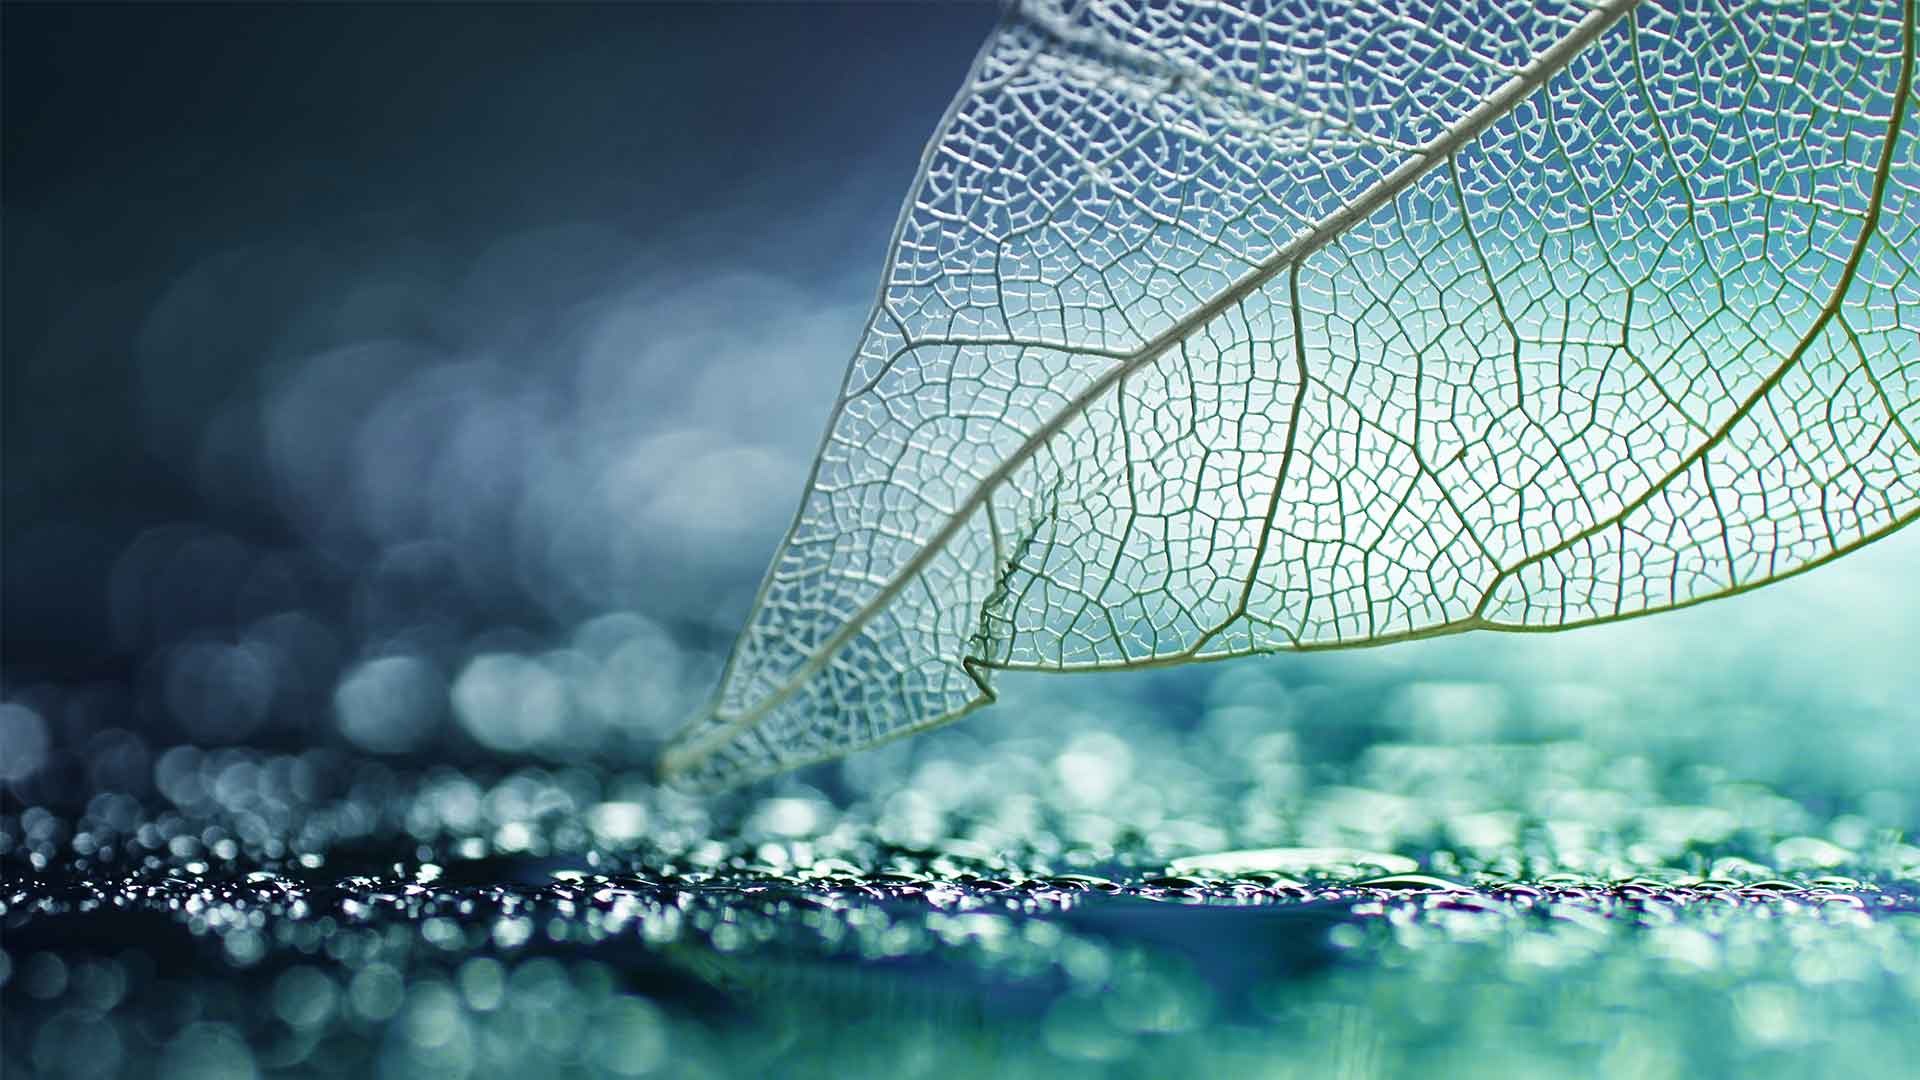 A transparent leaf